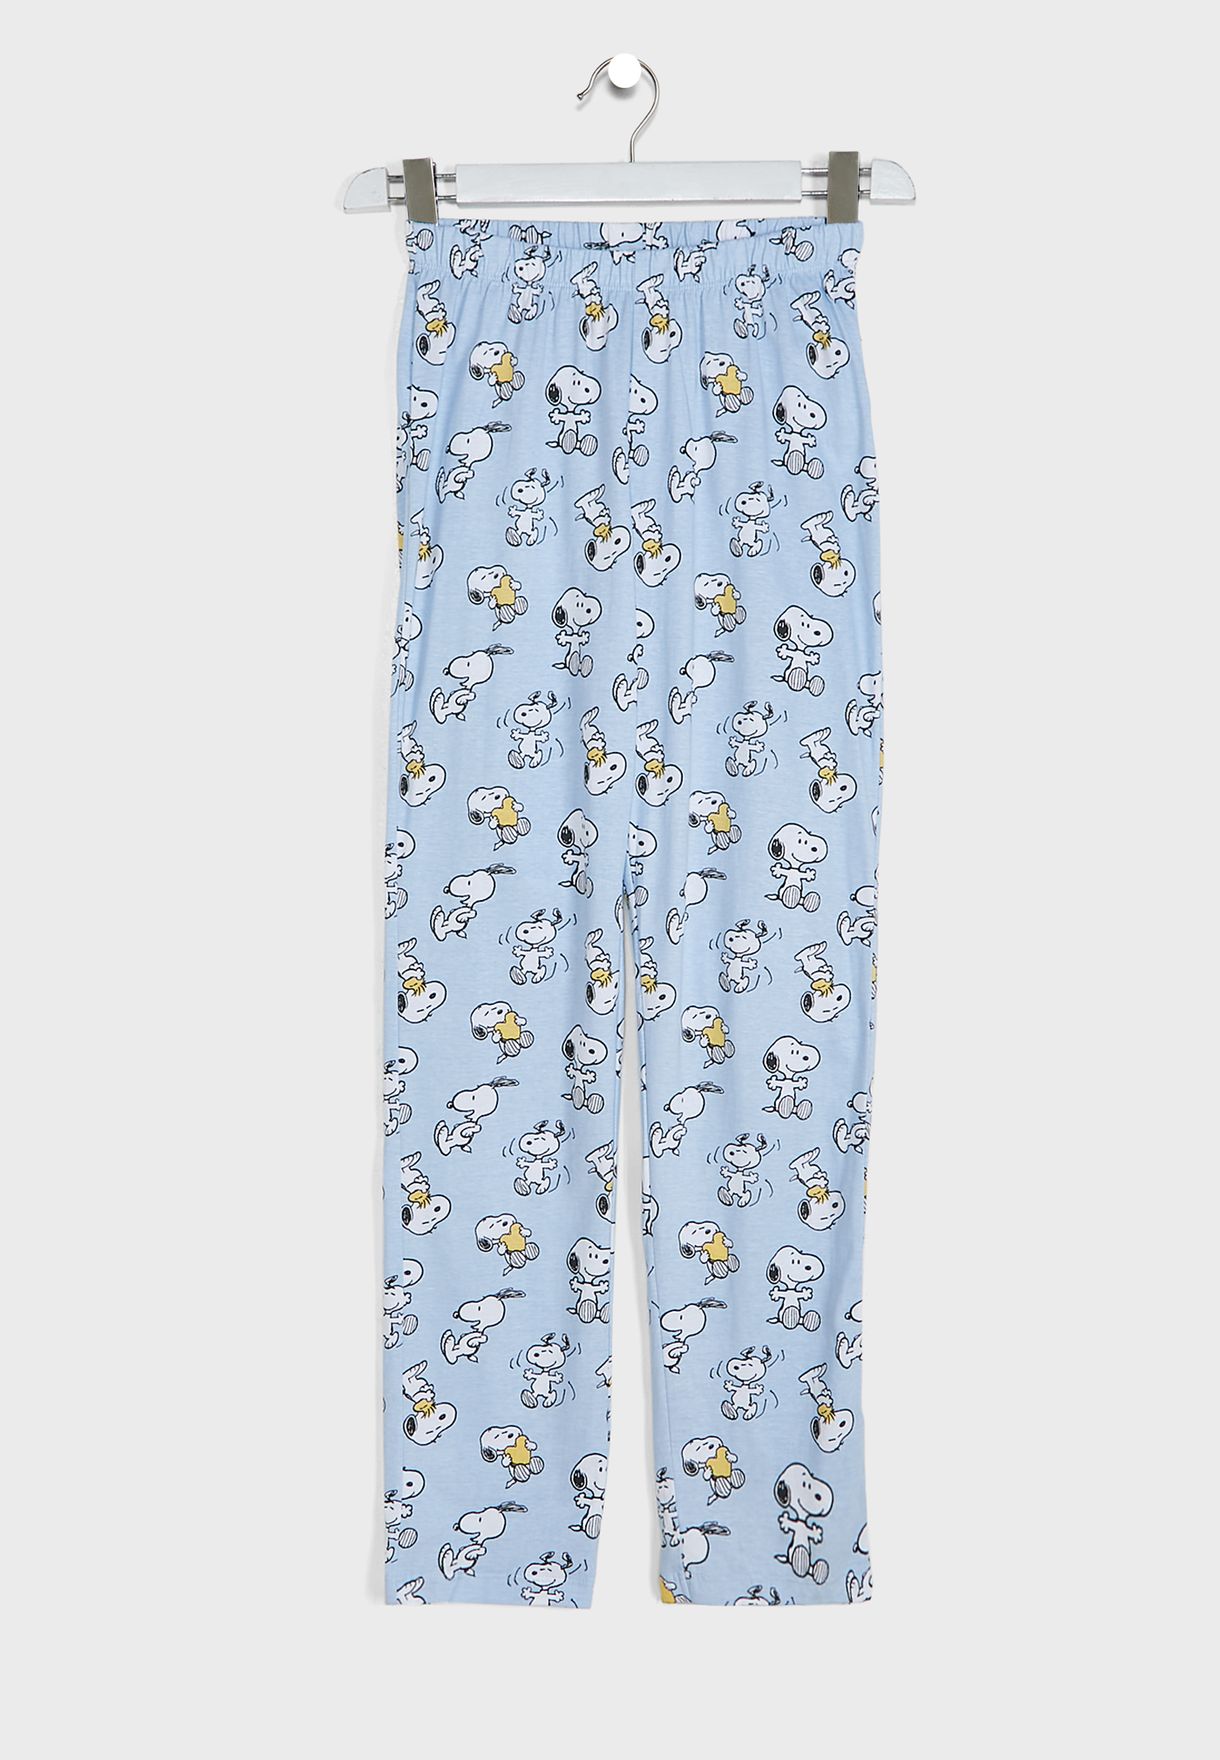 Youth Snoopy Pyjama Set